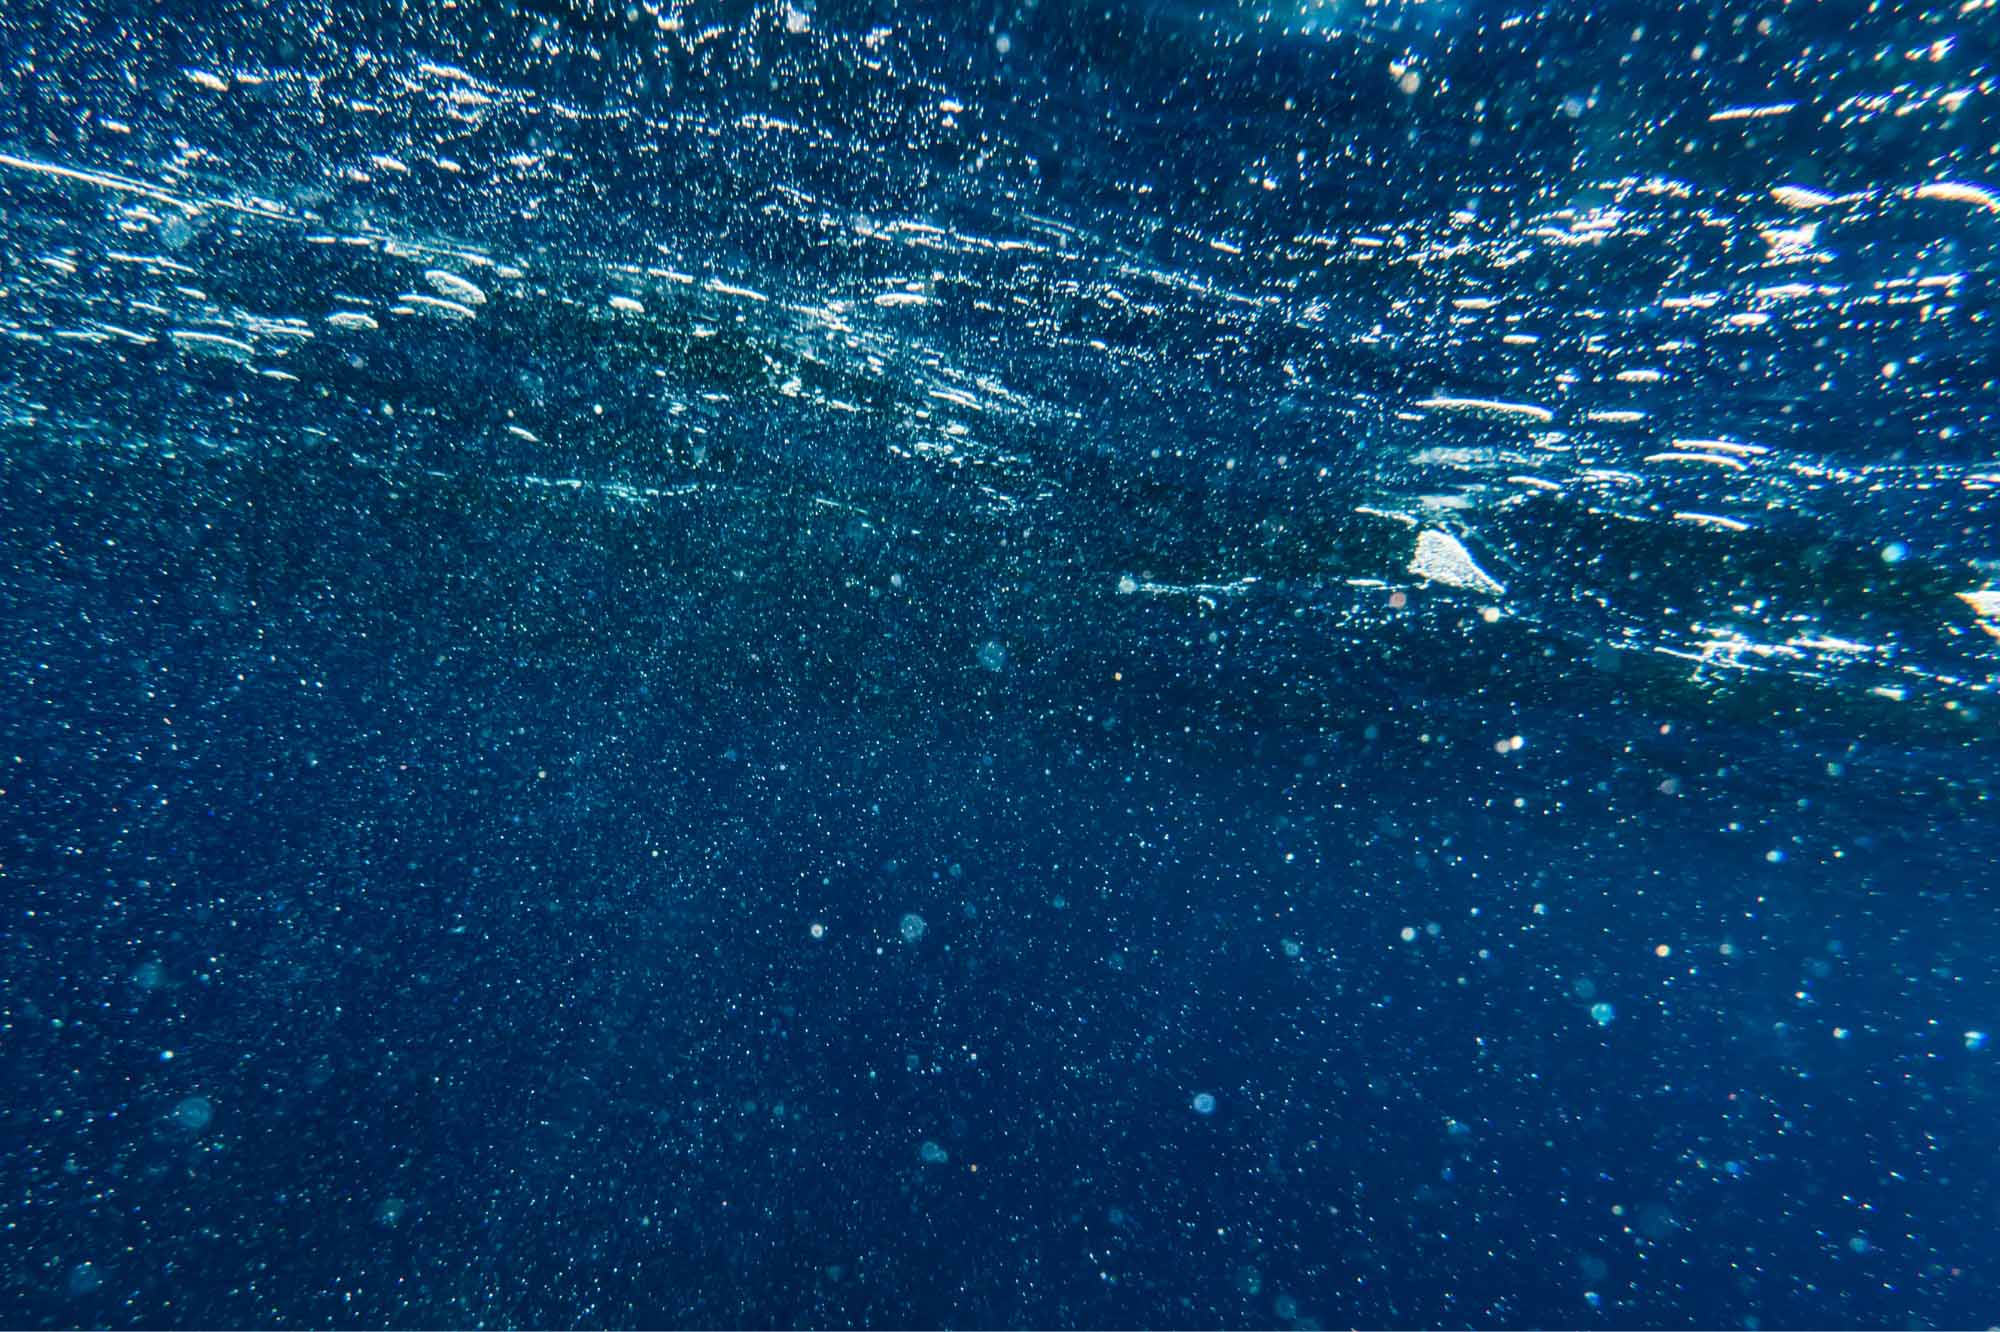 Image of bubbles in ocean